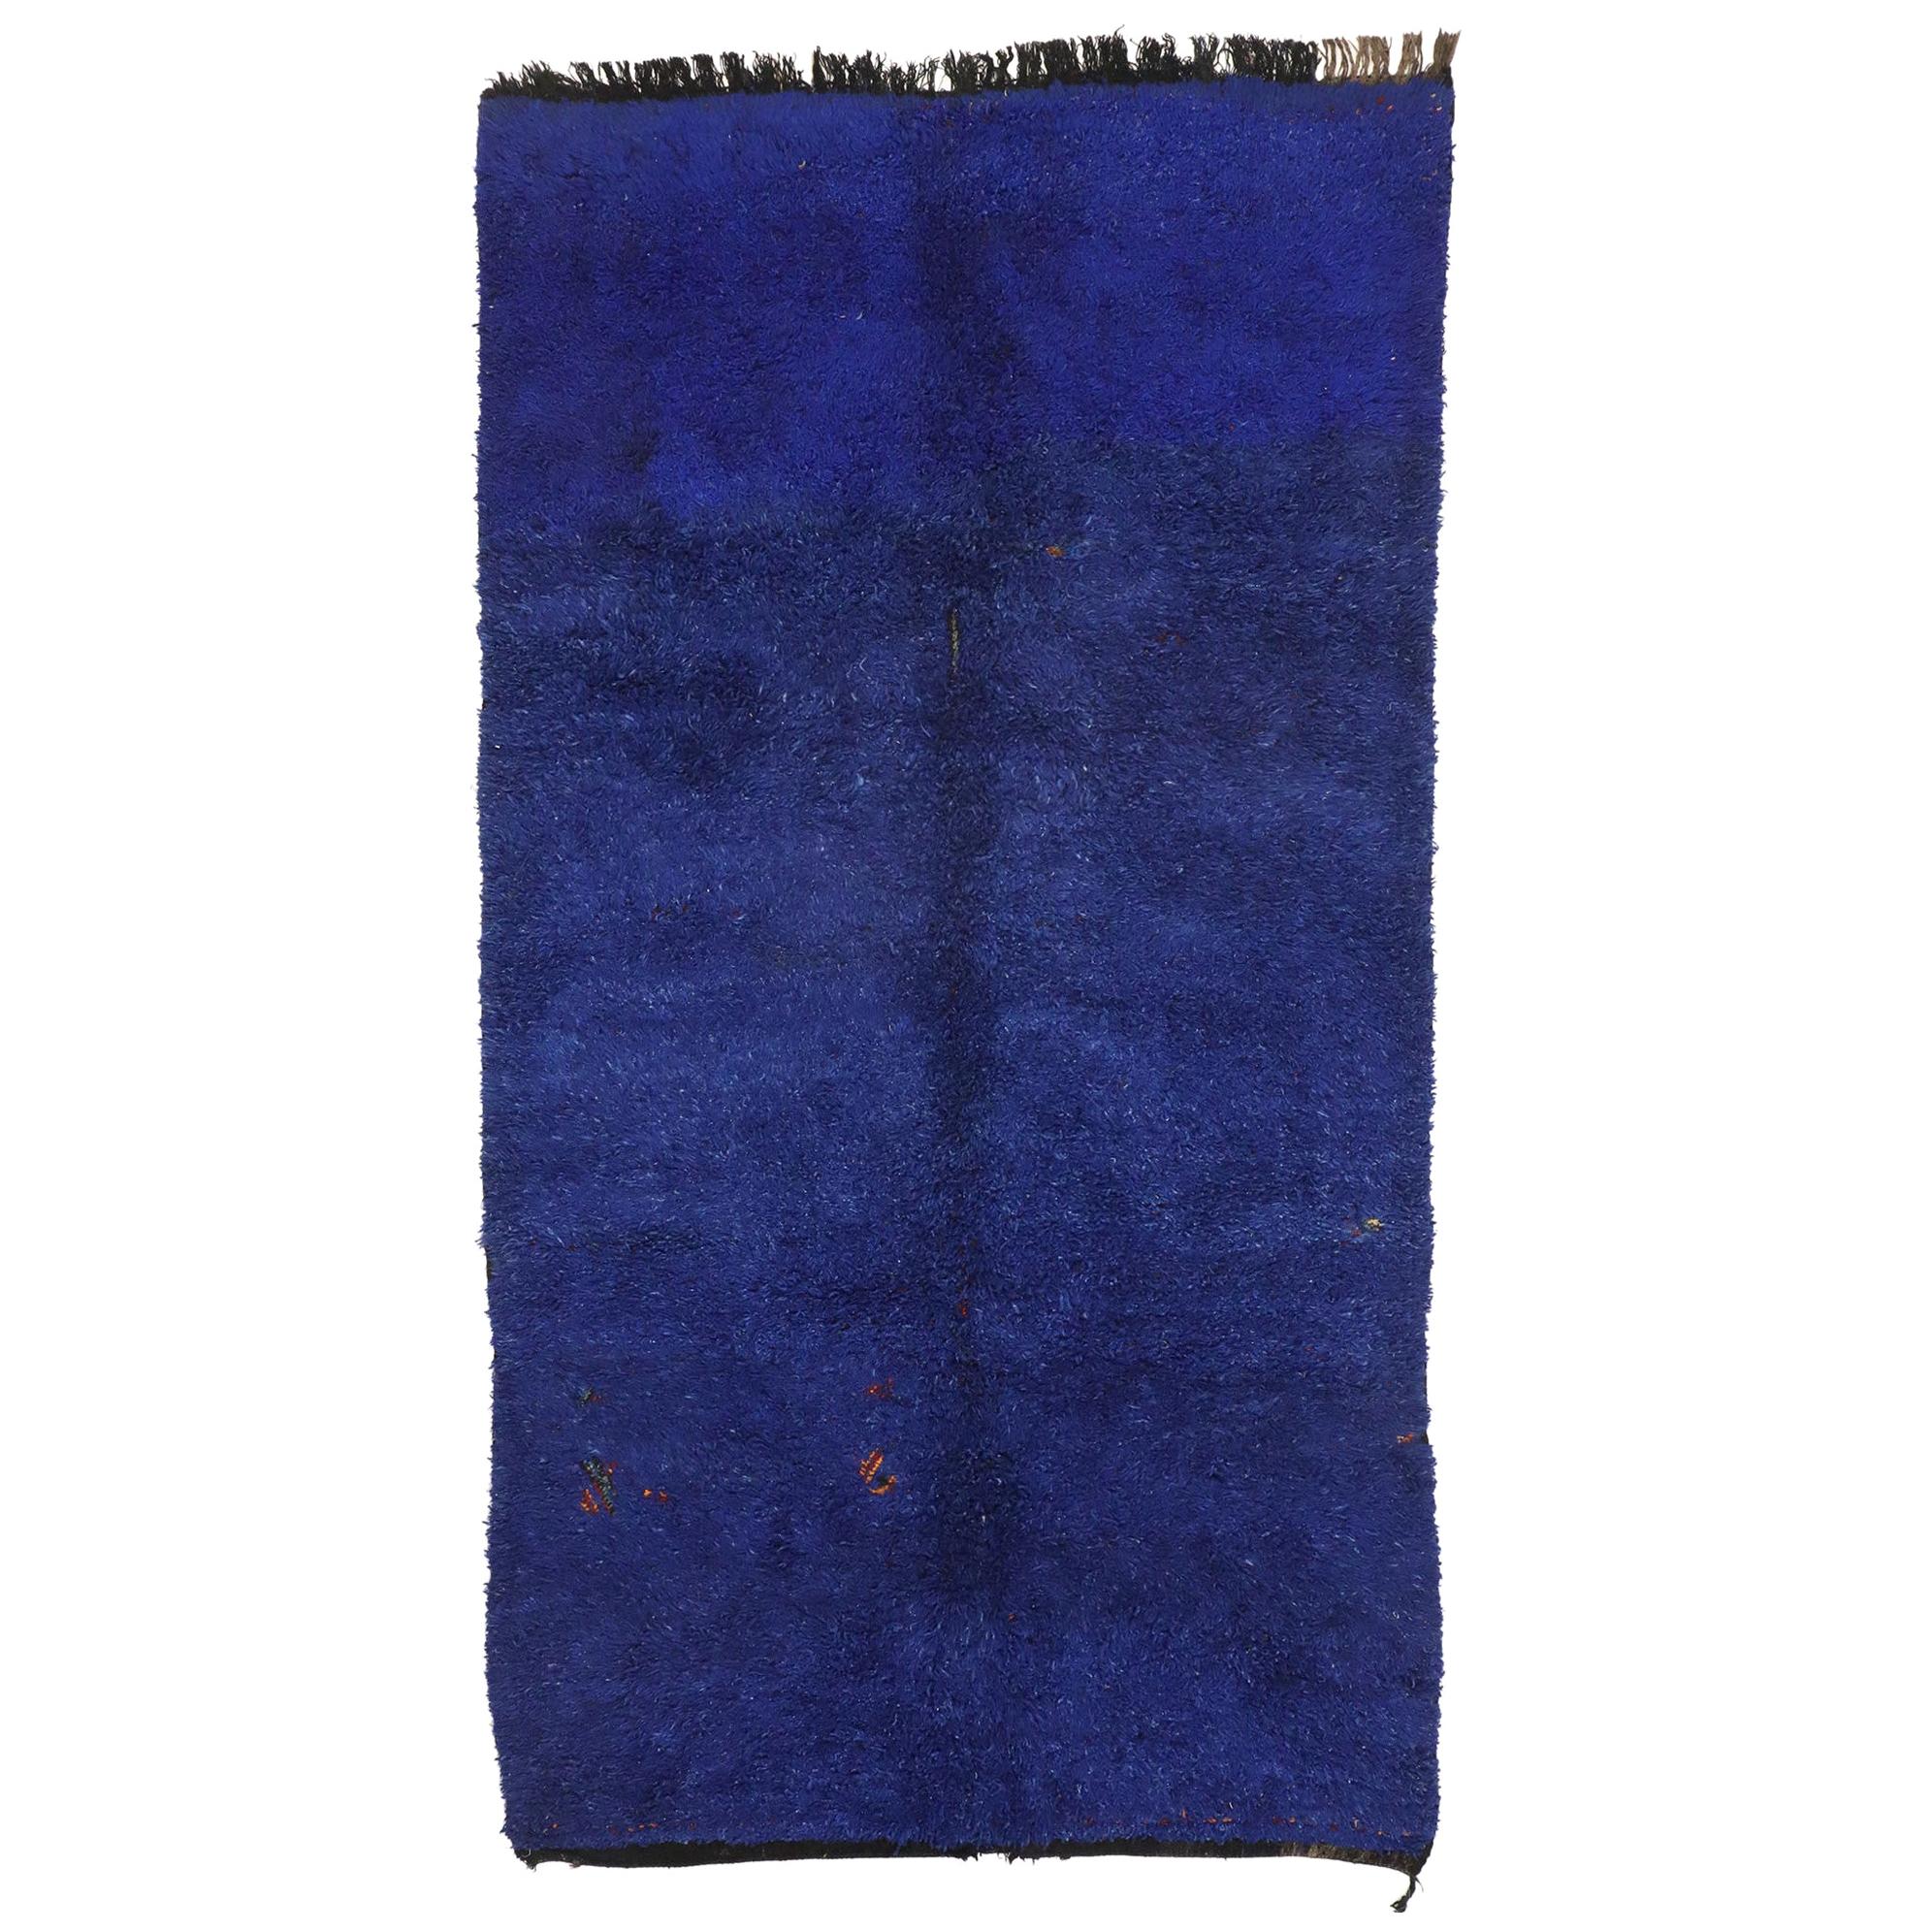 Vintage Blue Beni MGuild Moroccan Rug, Bohemian Paradise Meets Cozy Nomad